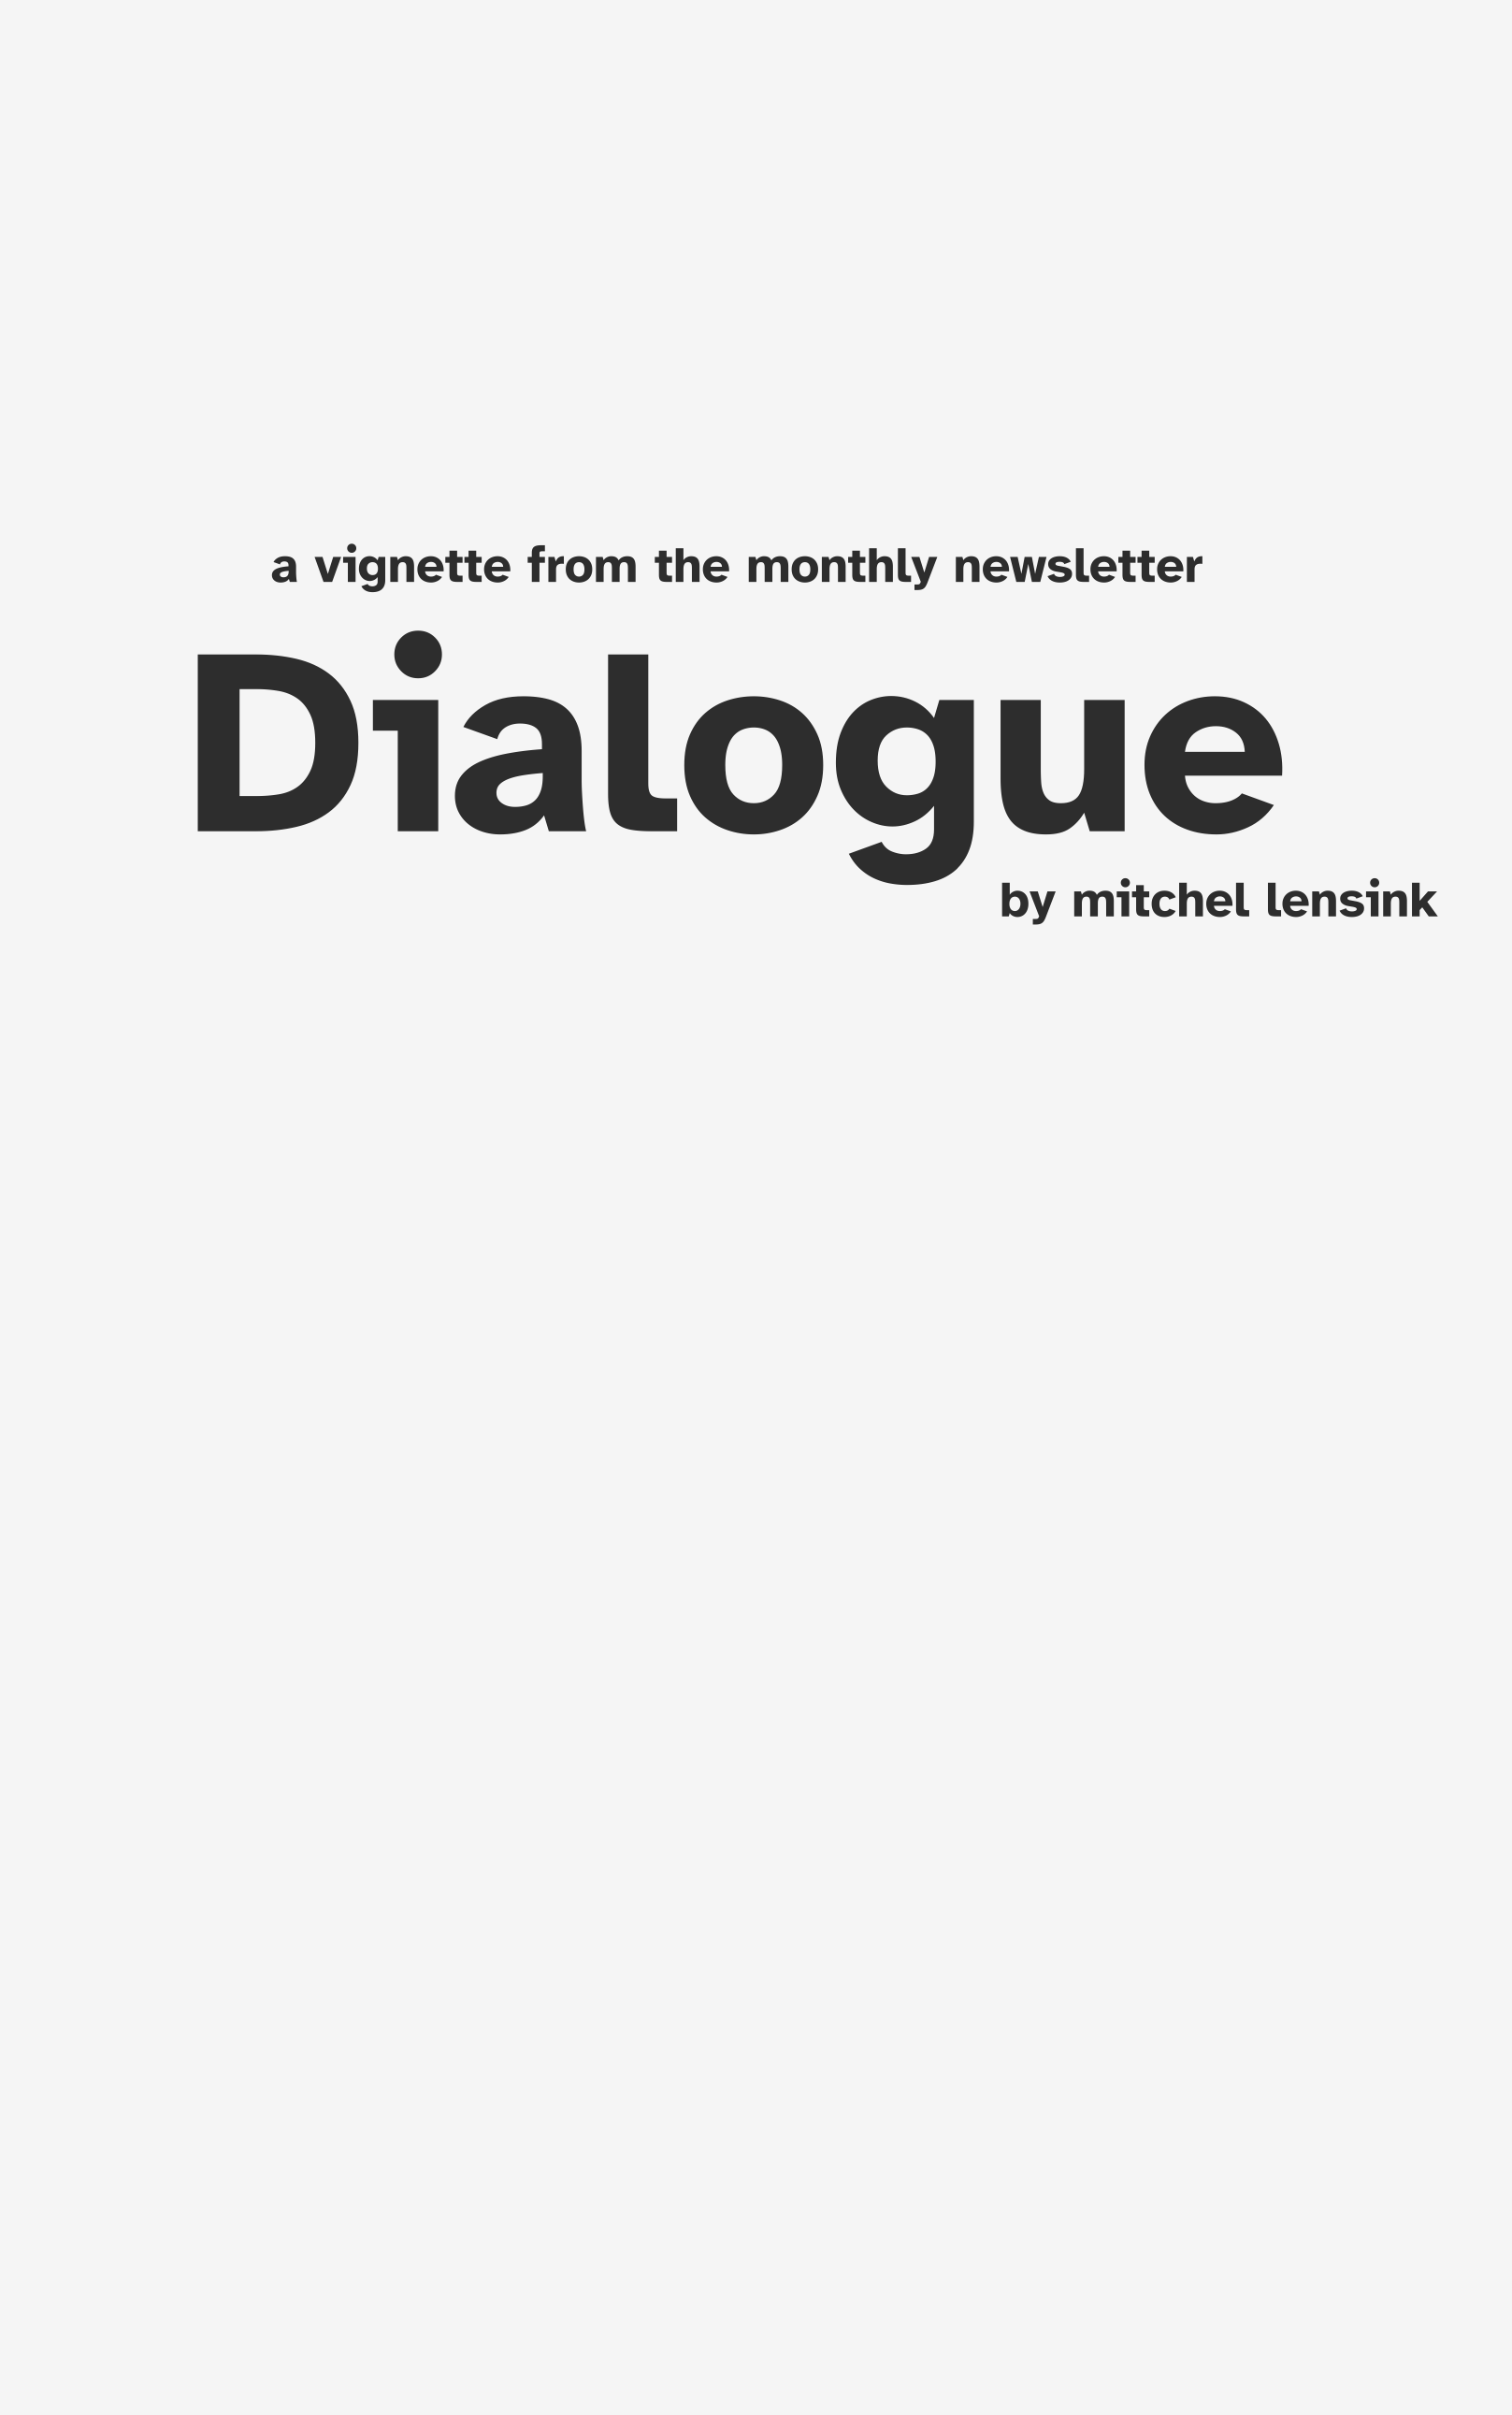 Dialogue (Blauwdruk exhibition)